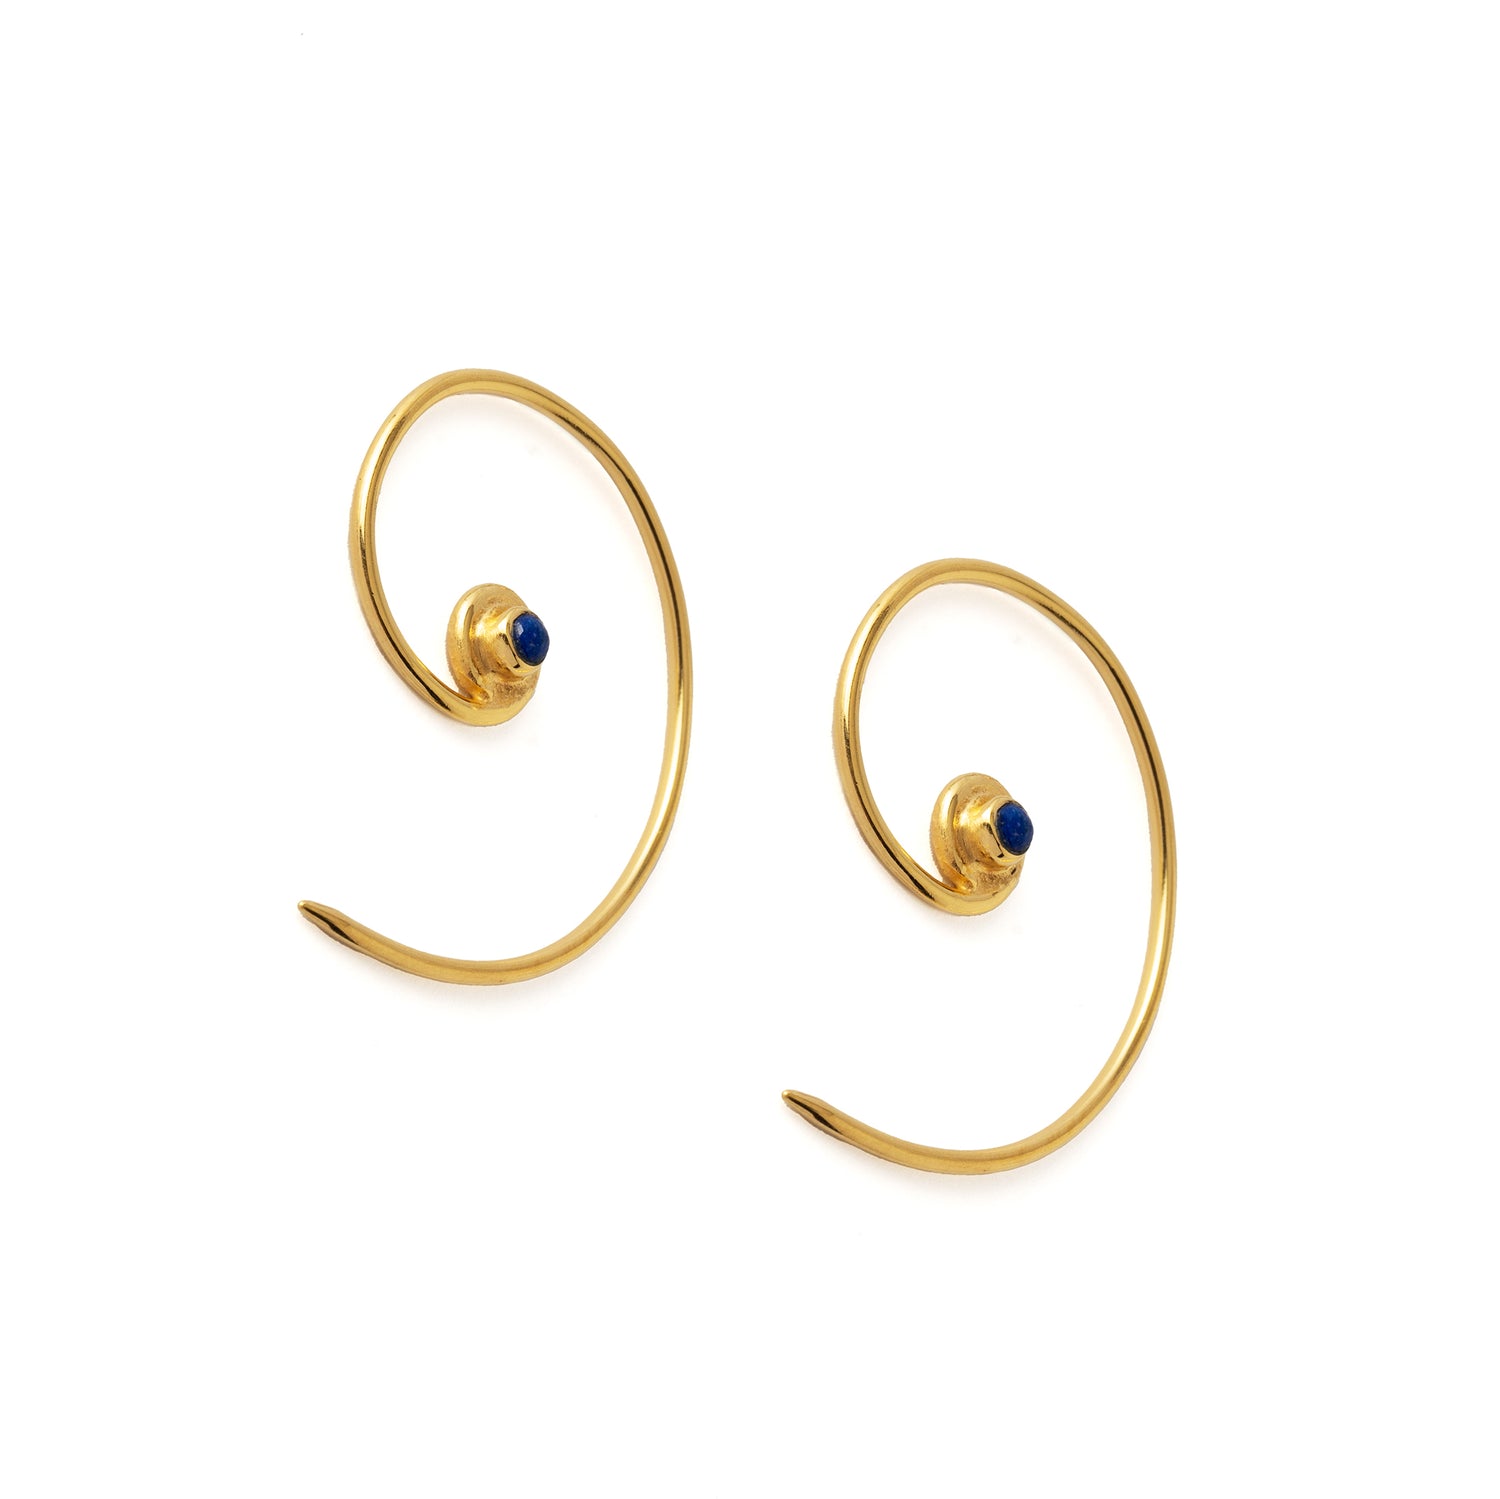 Gold &amp; Lapis Koru Earrings right side view